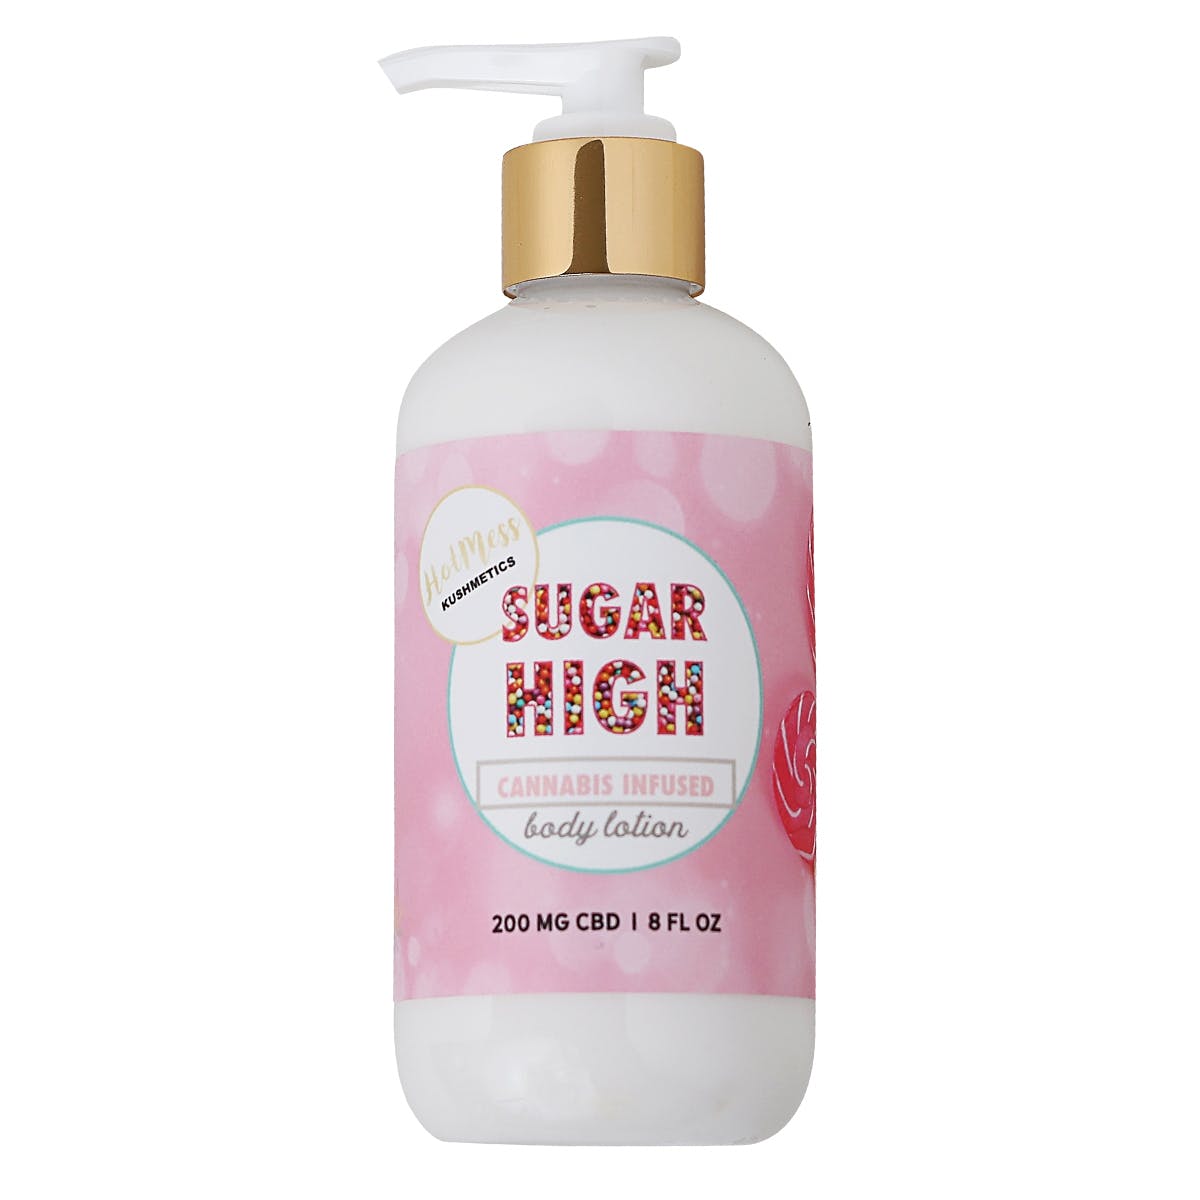 Sugar High Body Lotion, 8 oz / 200 mg CBD